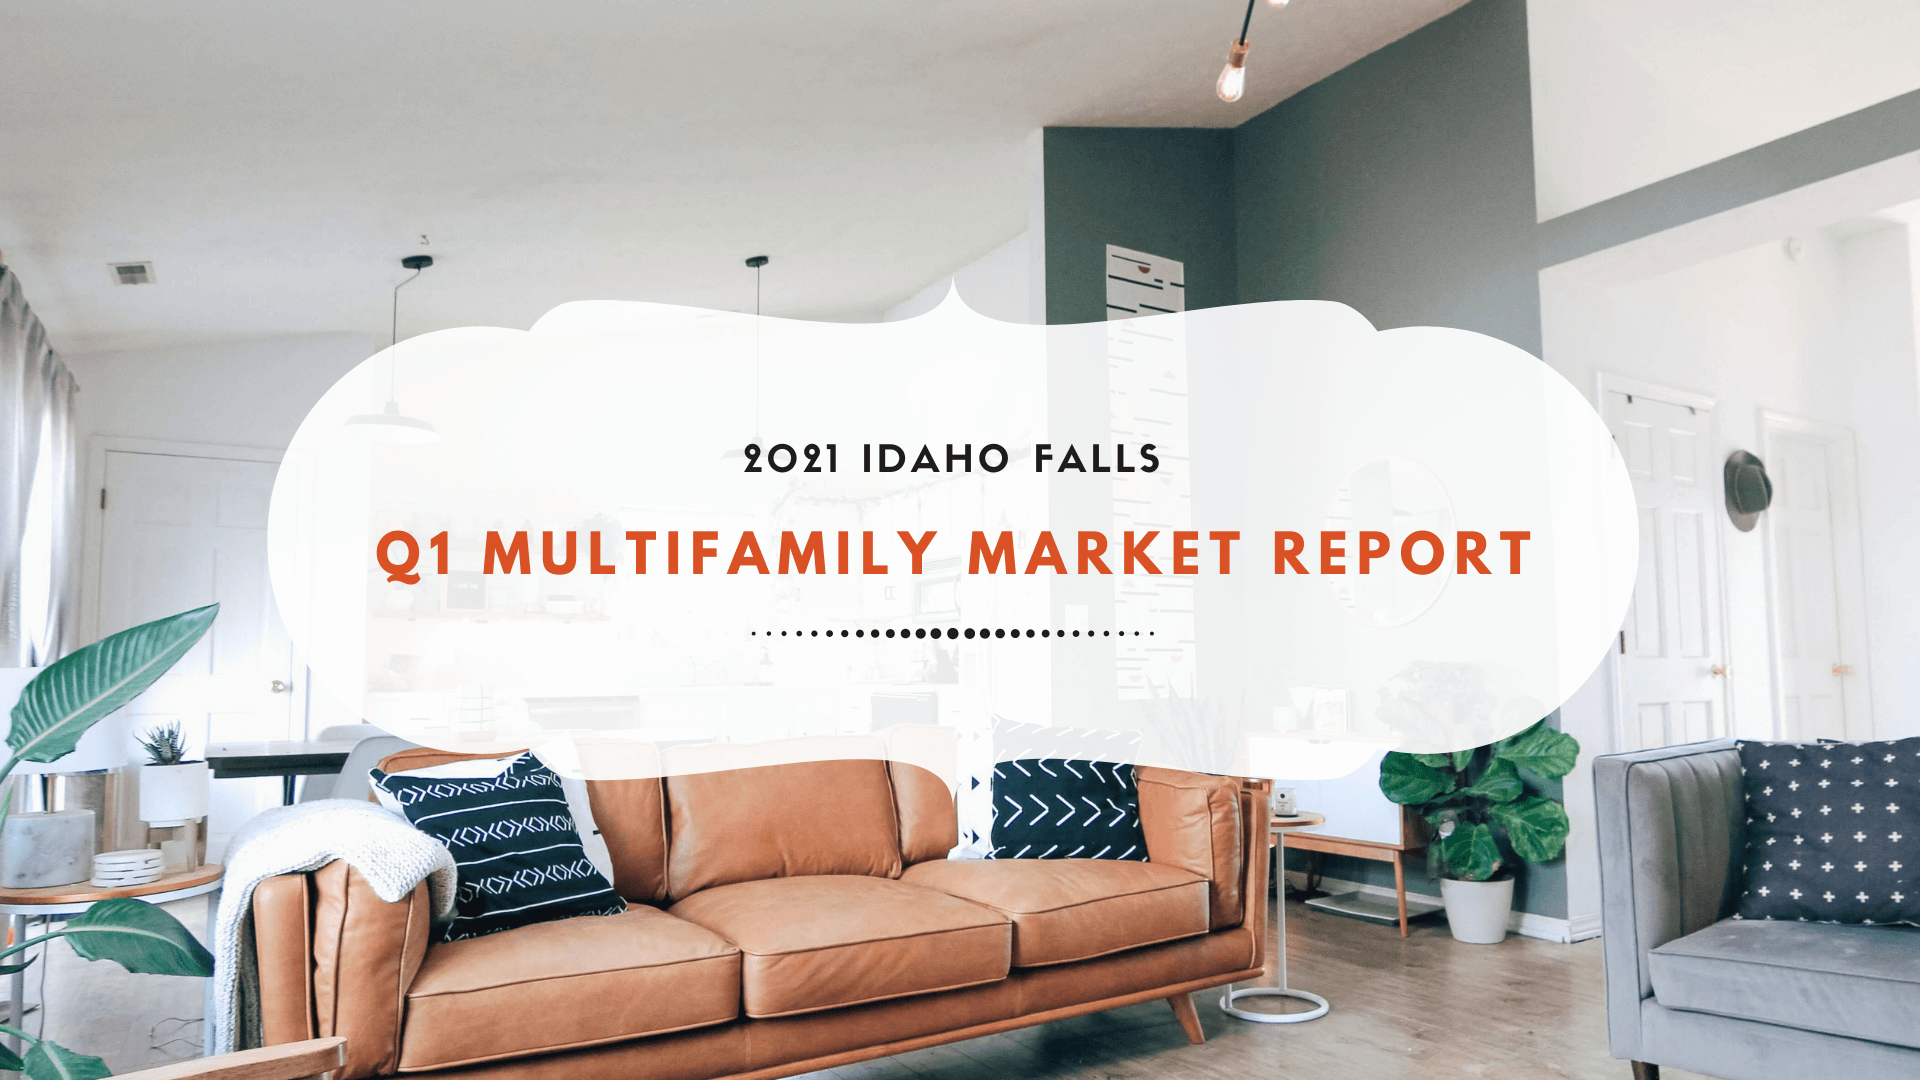 2021 Idaho Falls Multifamily Market Report | Q1